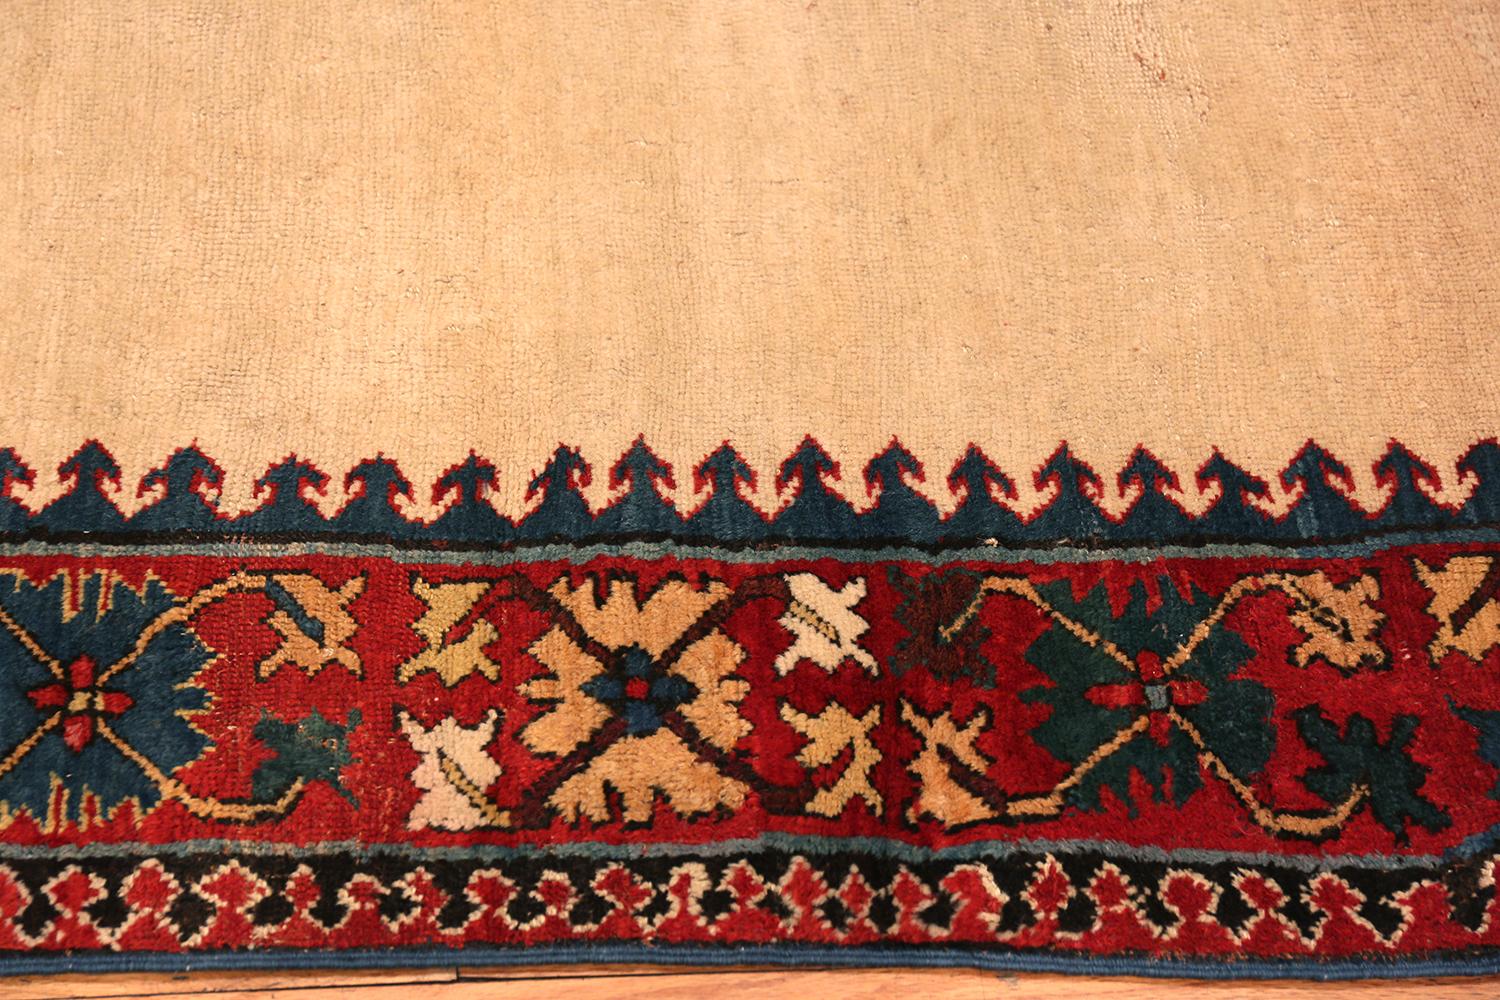 Antique Caucasian Moghan runner rug, country of origin: Caucasus, date circa second half of the 19th century. Size: 3 ft 1 in x 12 ft 7 in (0.94 m x 3.84 m). 

